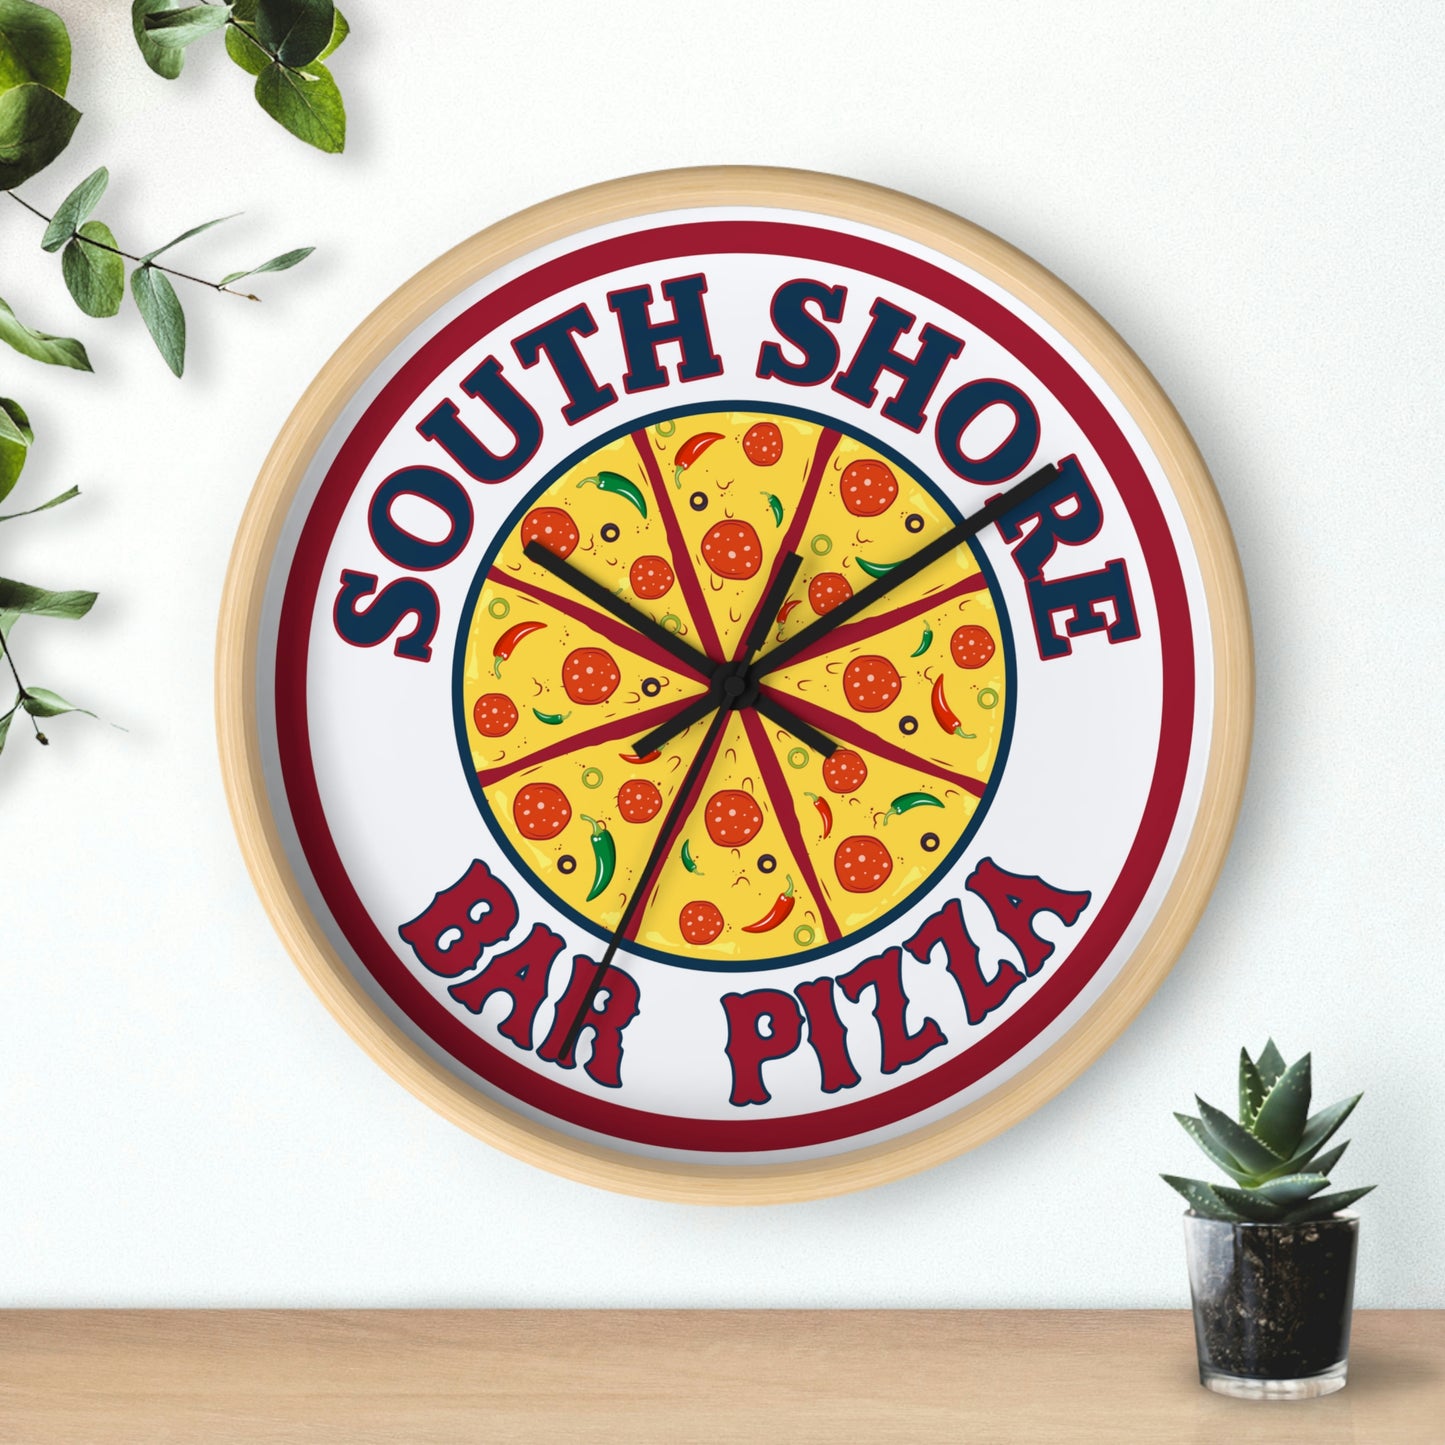 South Shore Bar Pizza Wall Clock